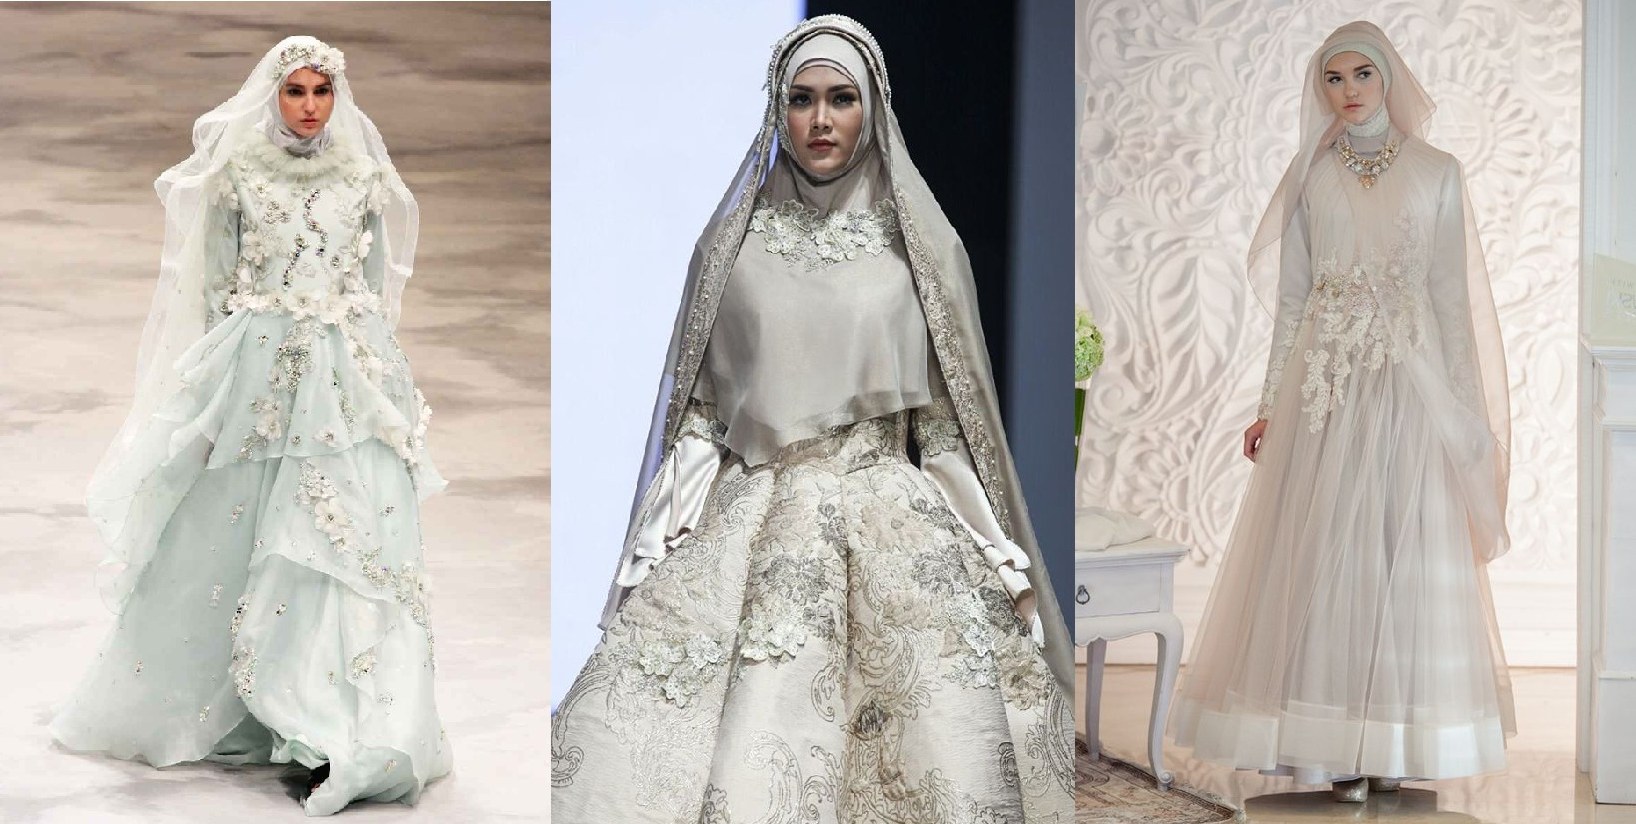 Design Baju Pengantin Muslimah Bercadar Rldj Inspirasi Gaun Pengantin Untuk Muslimah Bercadar Prelo